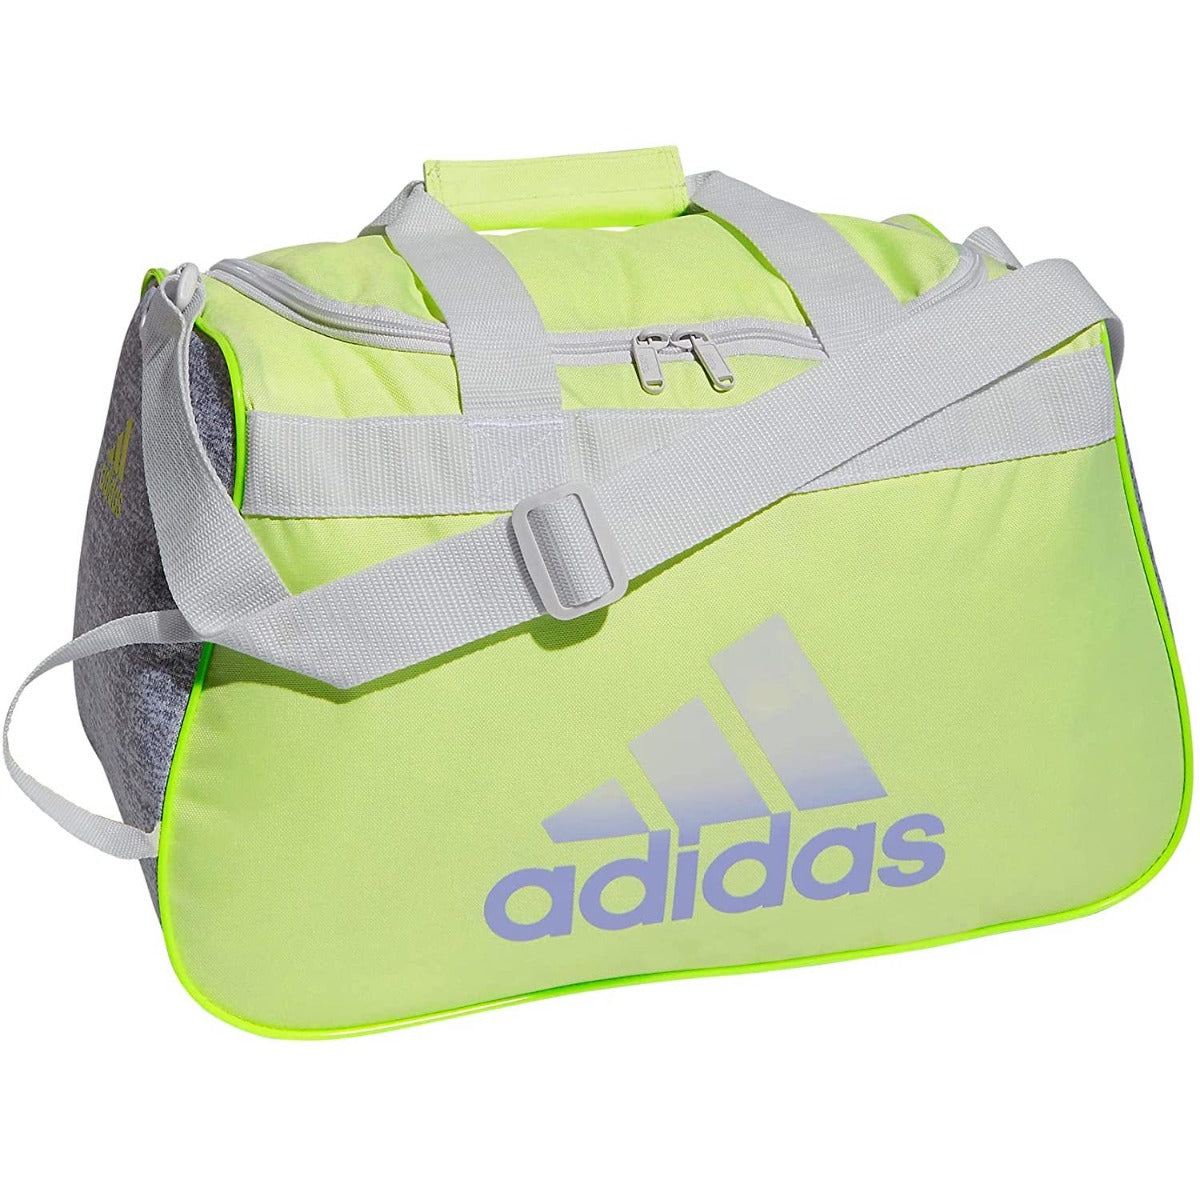 Adidas Diablo Small Duffel Bag Lime Green-Grey (Front)